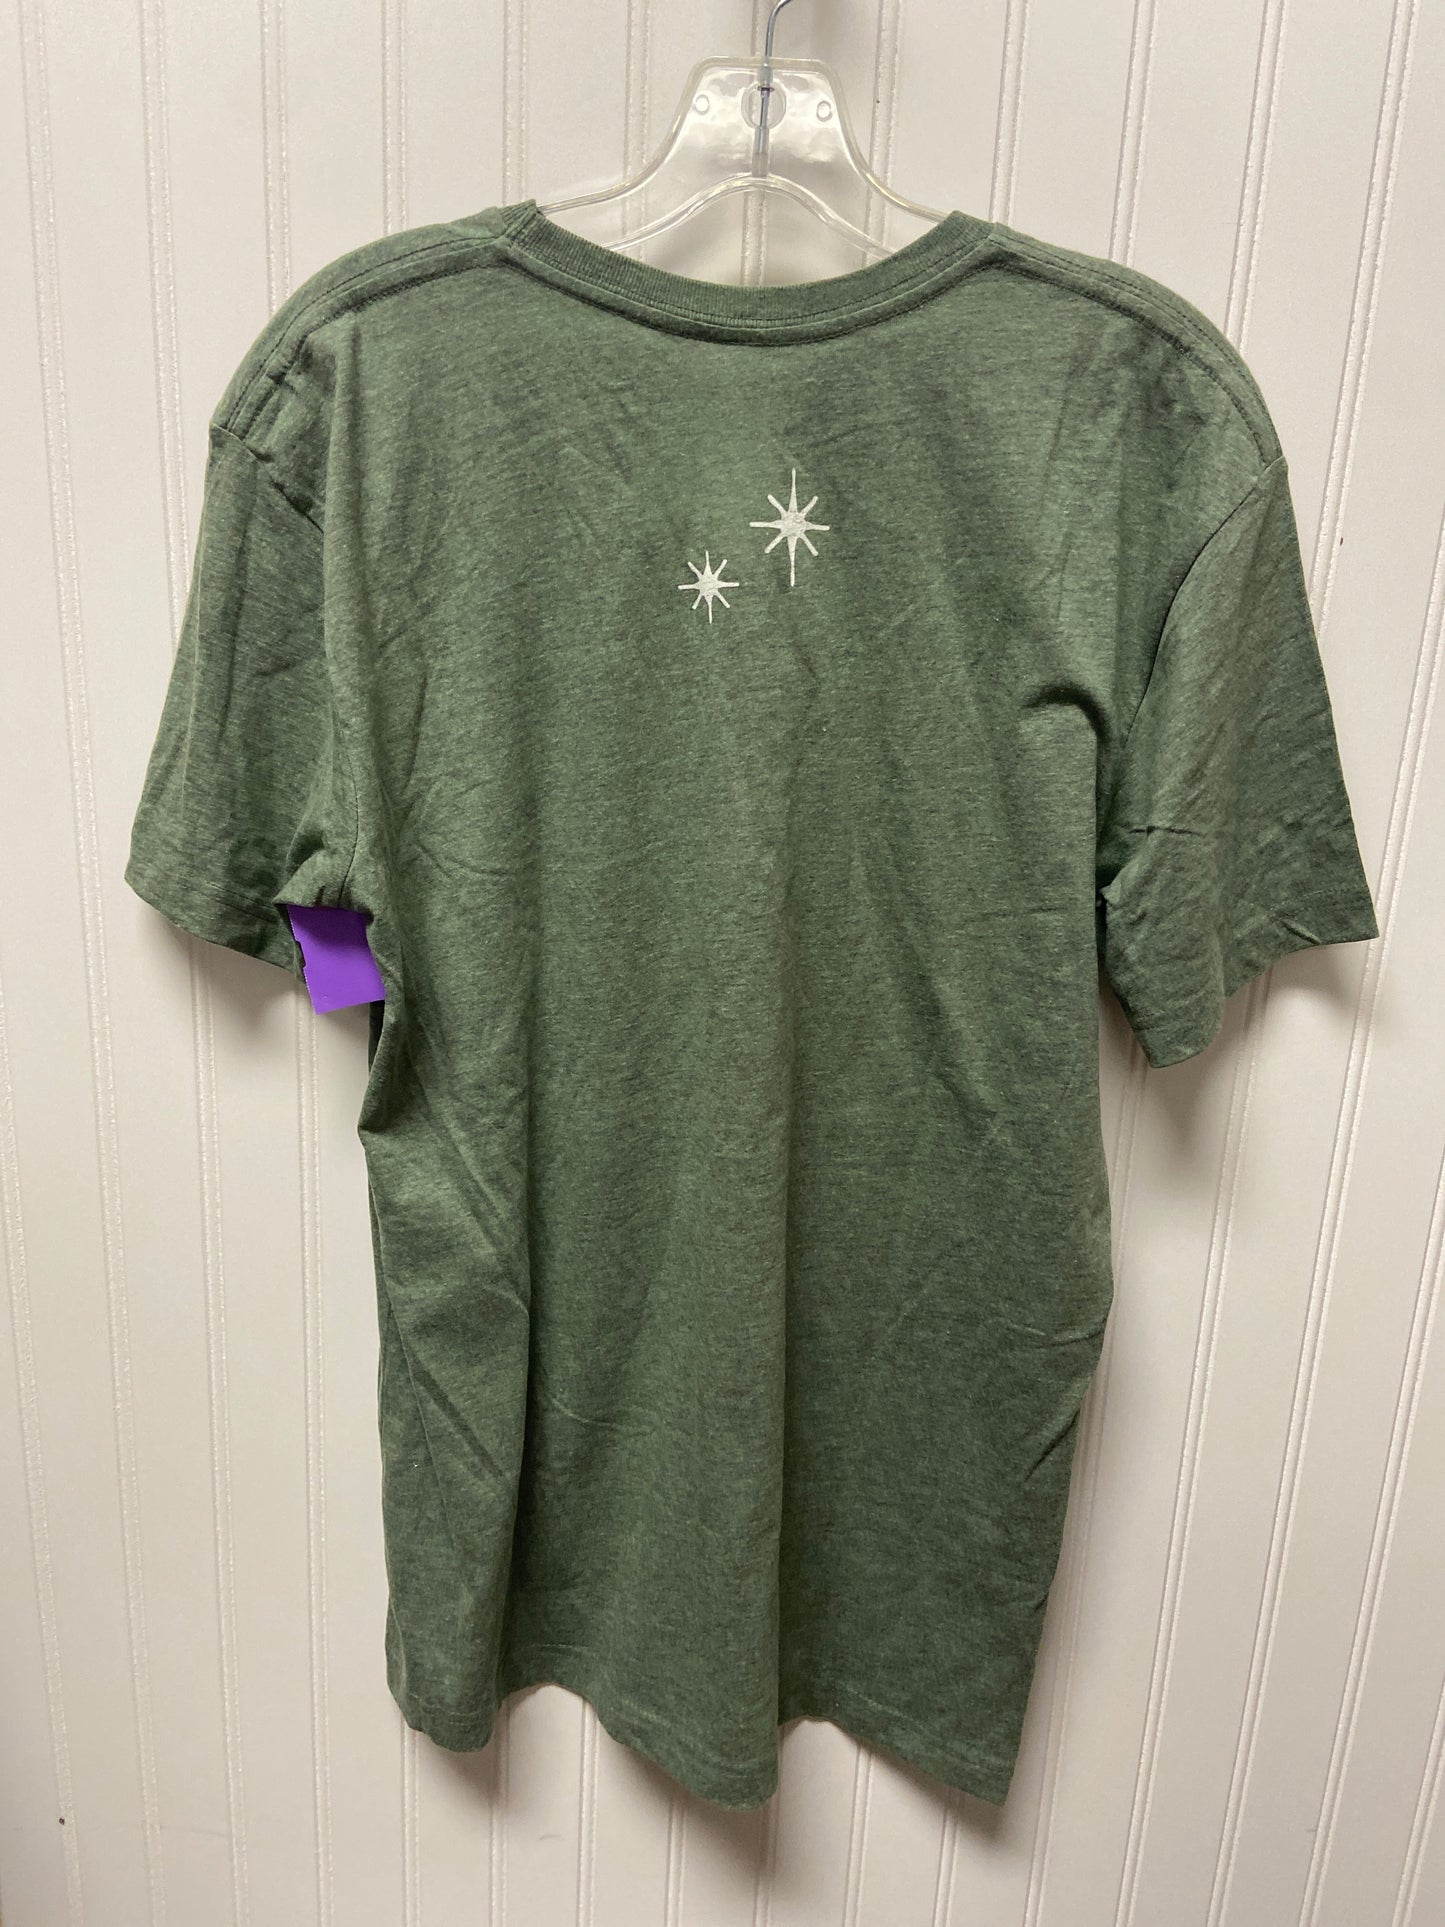 Green Top Short Sleeve Basic Disney Store, Size M